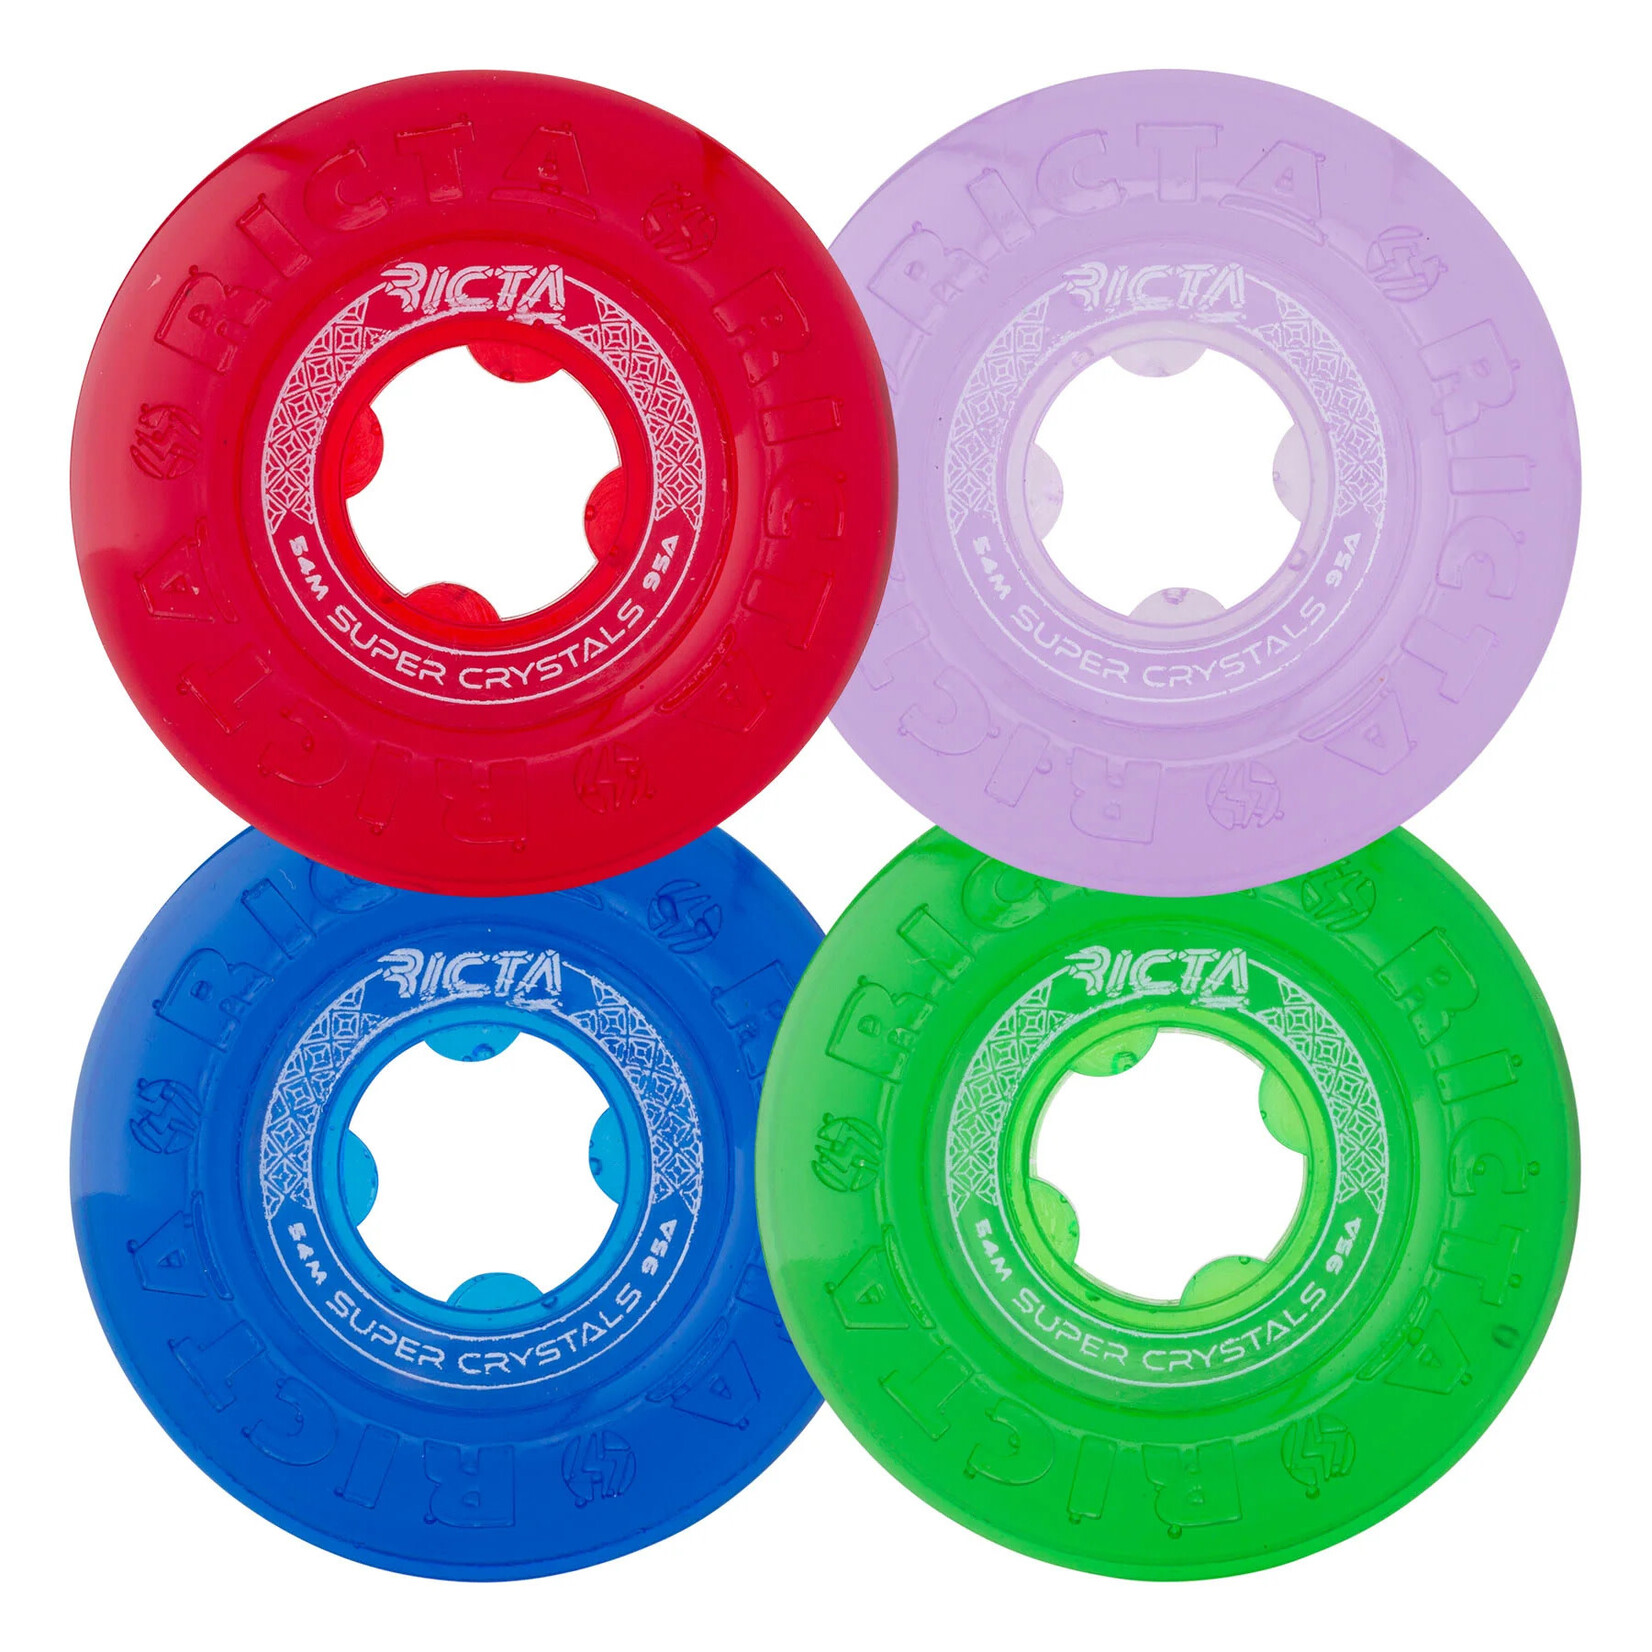 Ricta Ricta Super Crystals 54mm 95a Wheels - Trans Purple/Green/Blue/Red - (Set of 4)